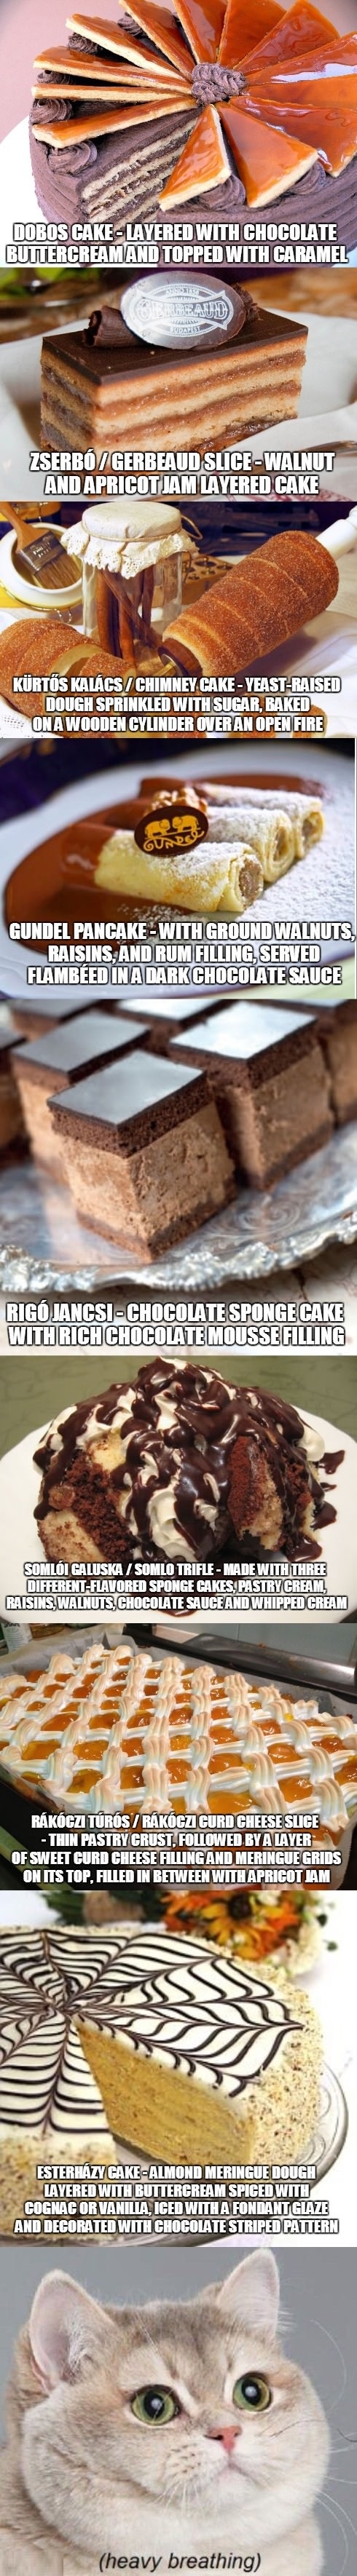 Hungarian desserts